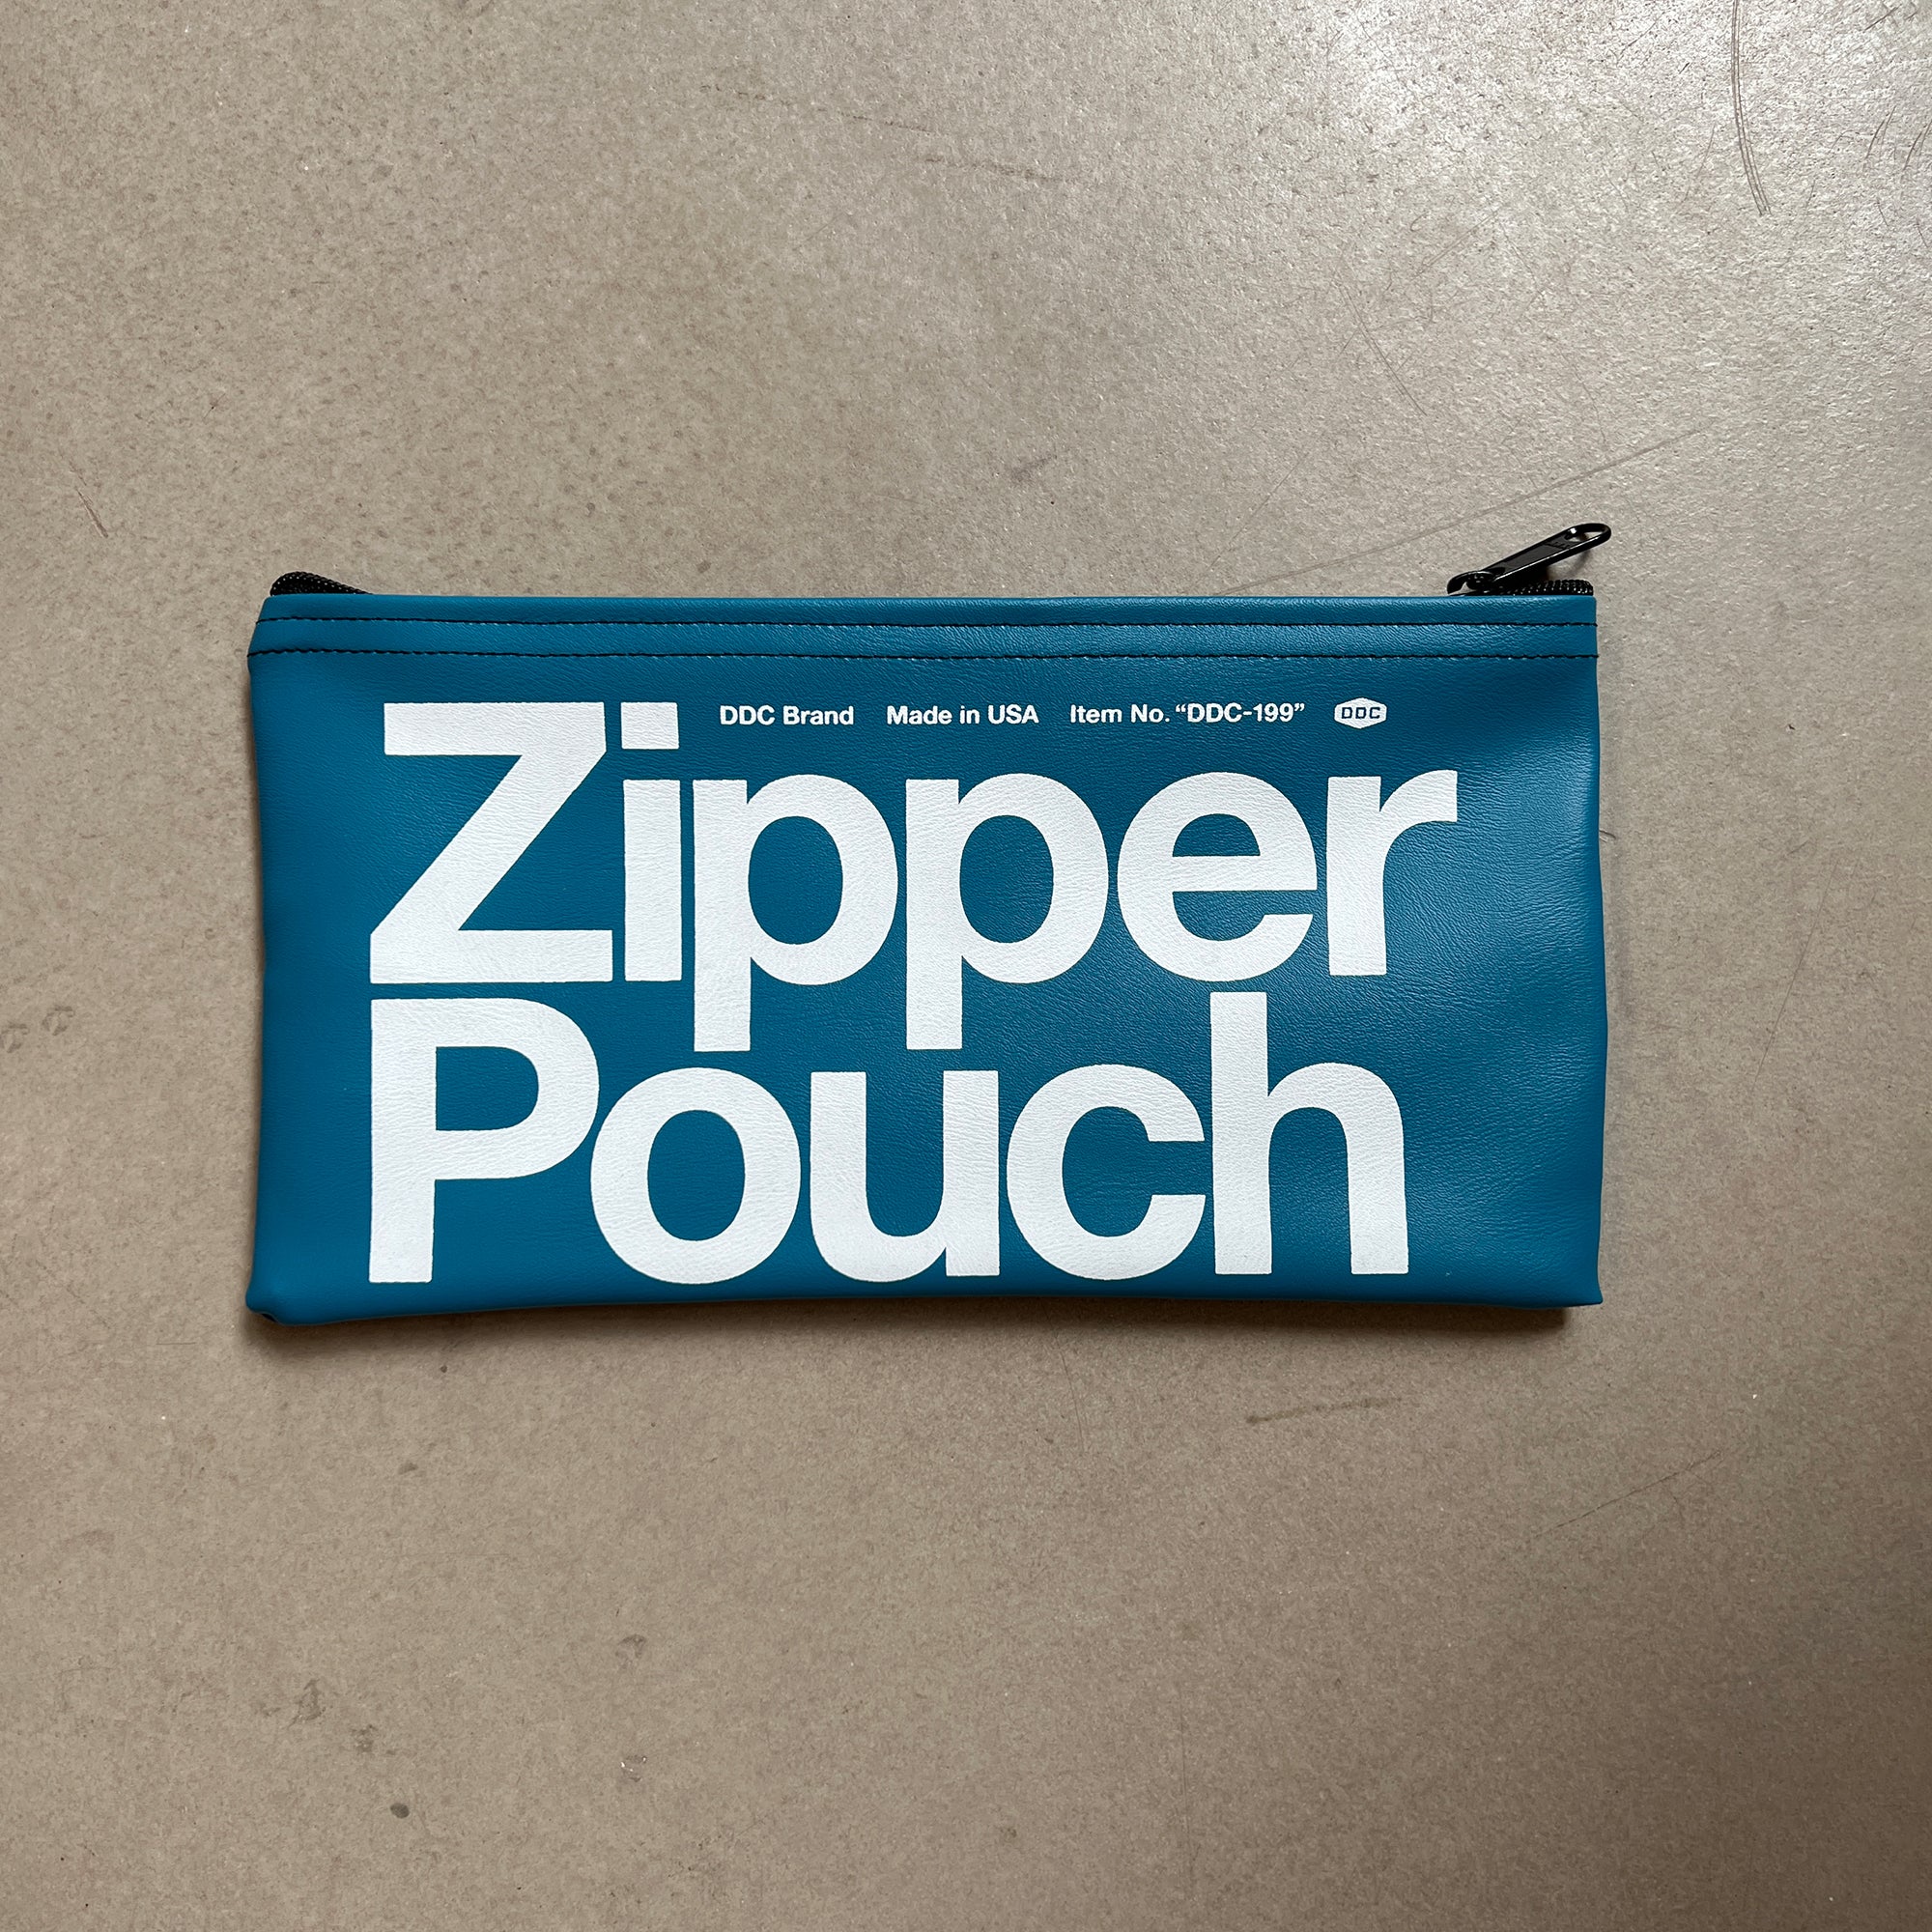 DDC-199 "Creepy Zipper Pouch"